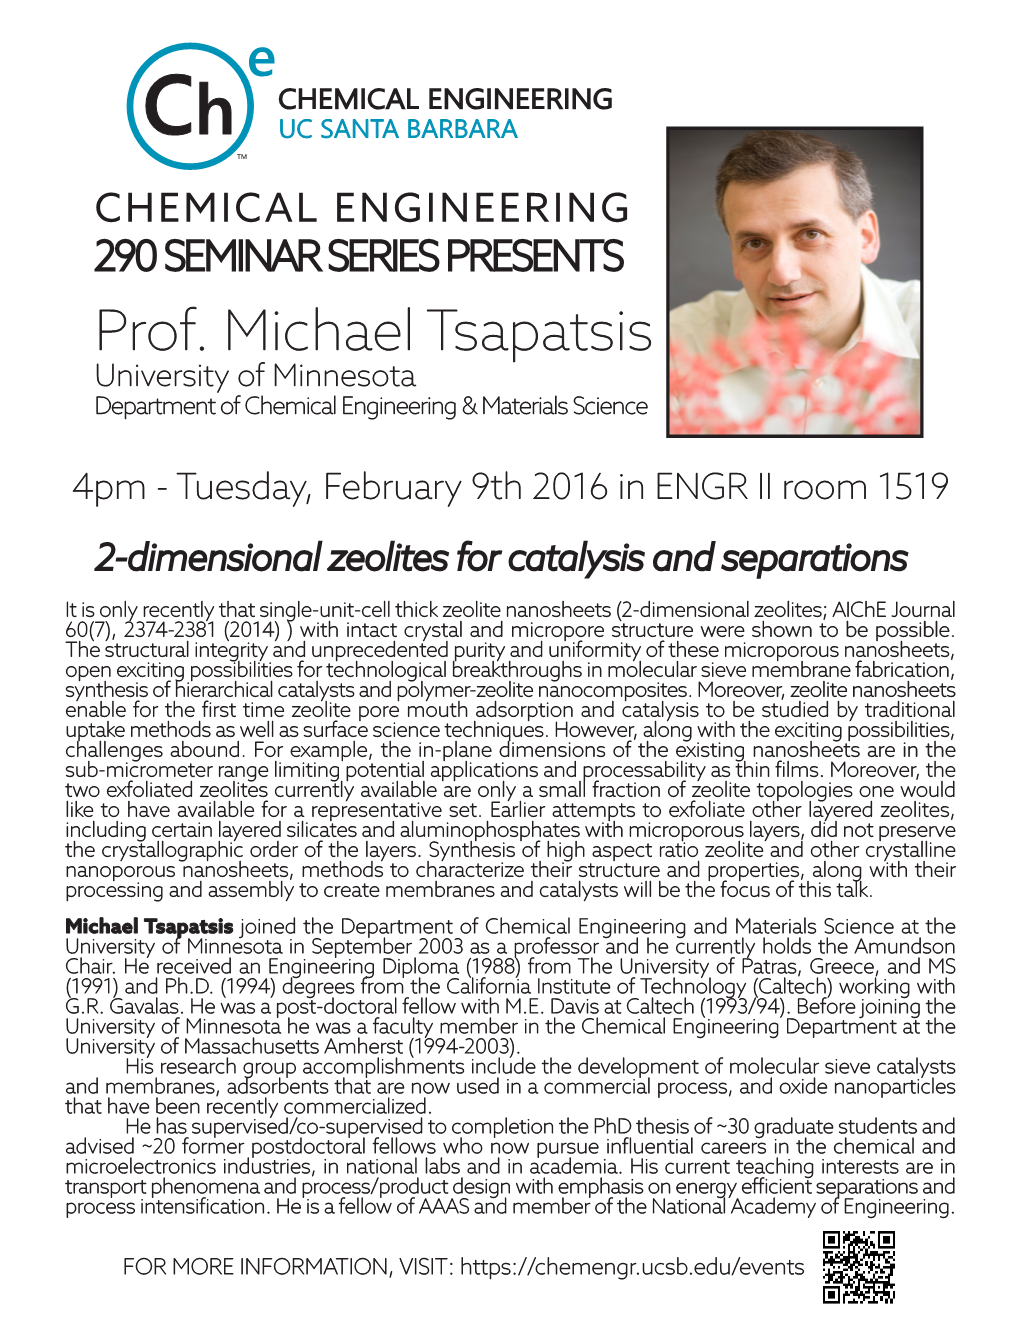 Prof. Michael Tsapatsis University of Minnesota Department of Chemical Engineering & Materials Science